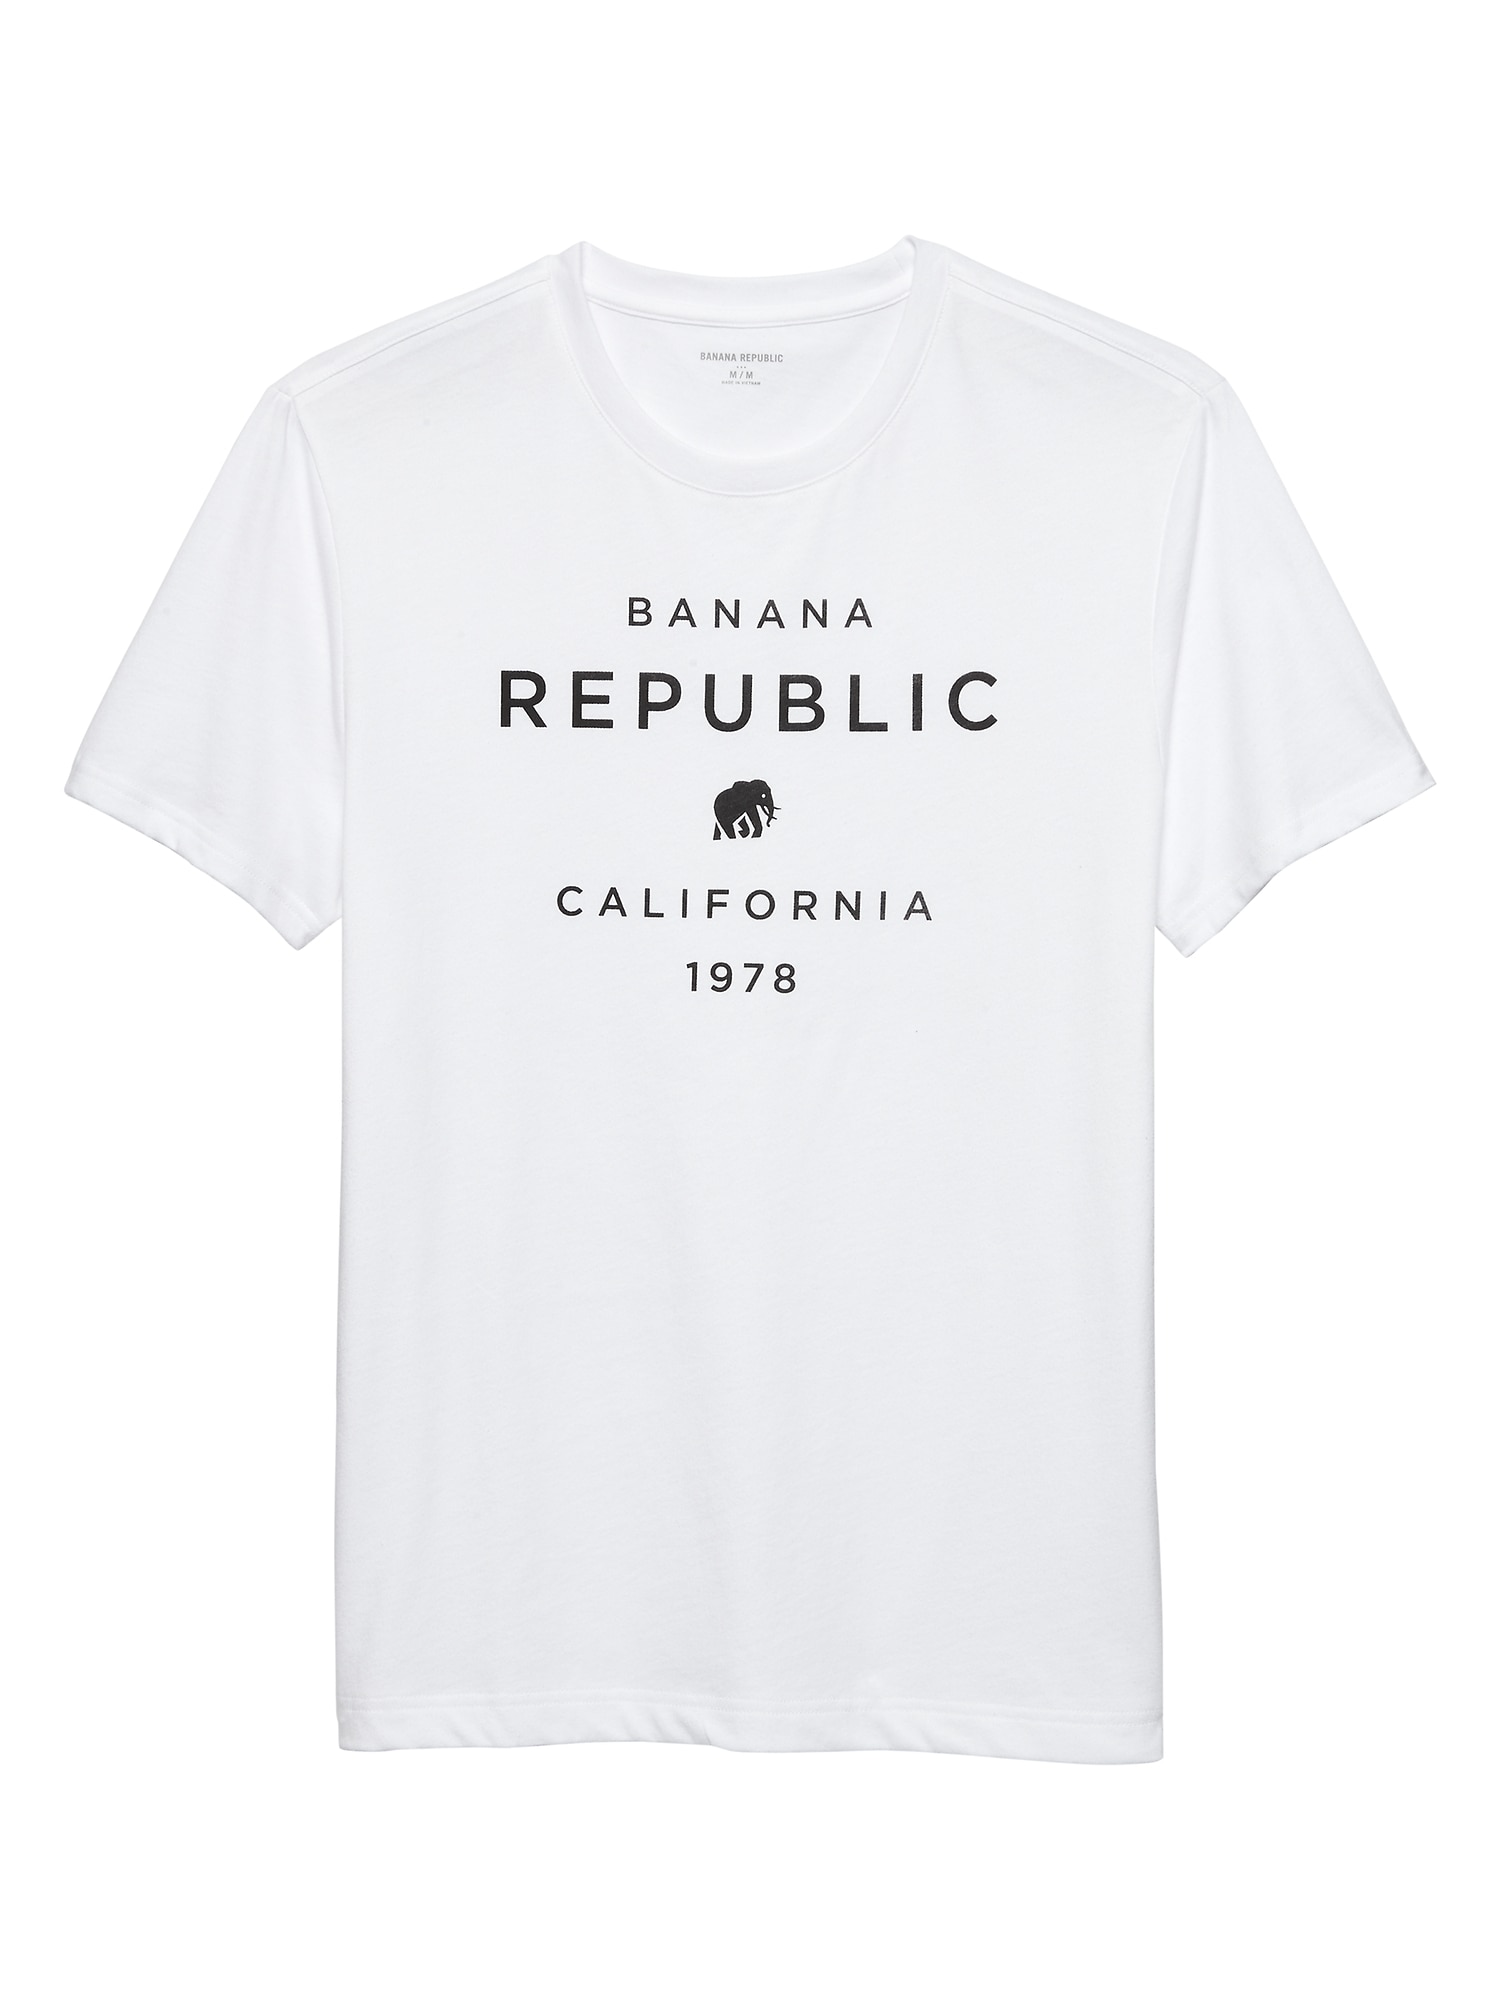 Banana Republic T Shirts Factory Sale, 59% OFF | www.gruposincom.es